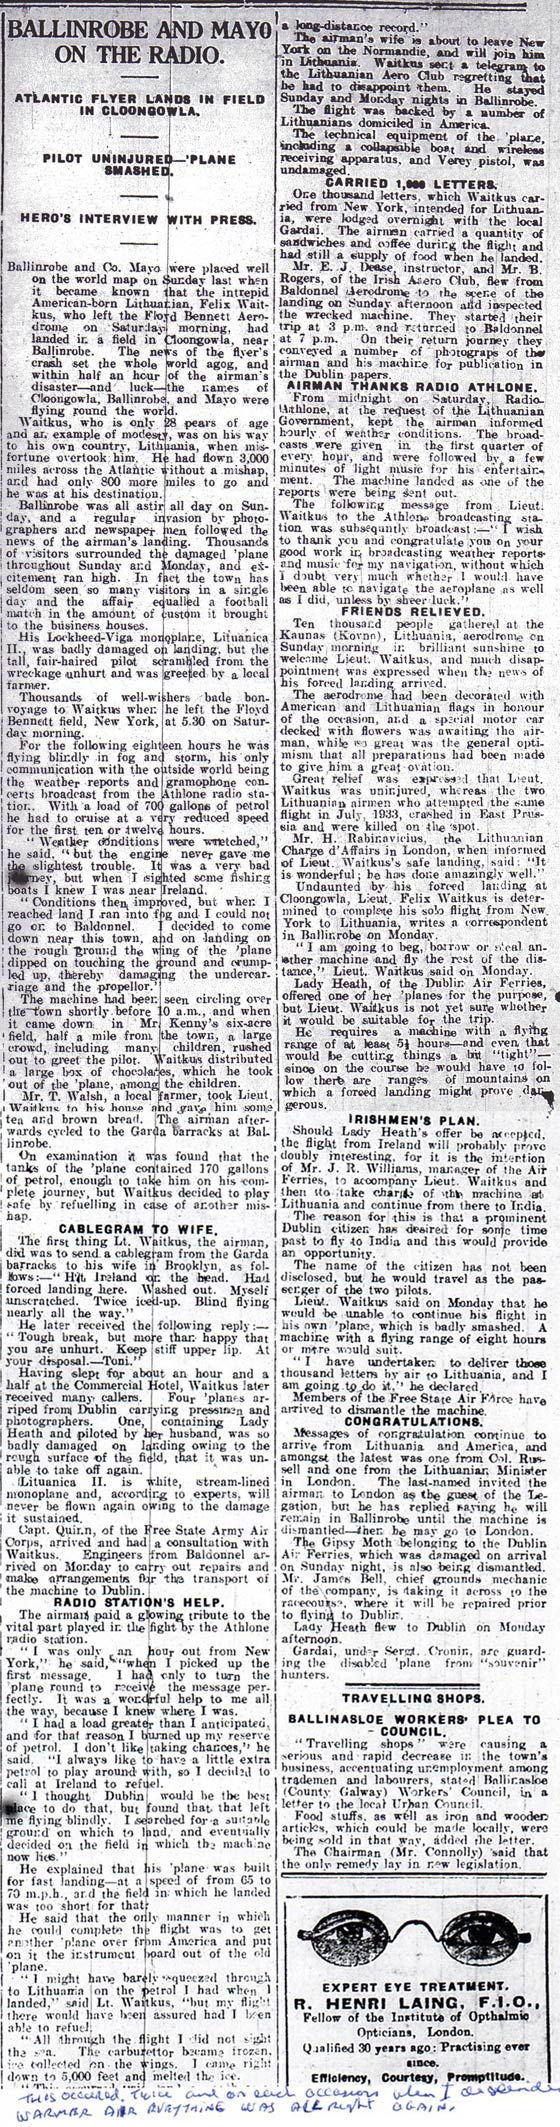 County Mayo Newspaper, September 28, 1935 (Source: Murphy)